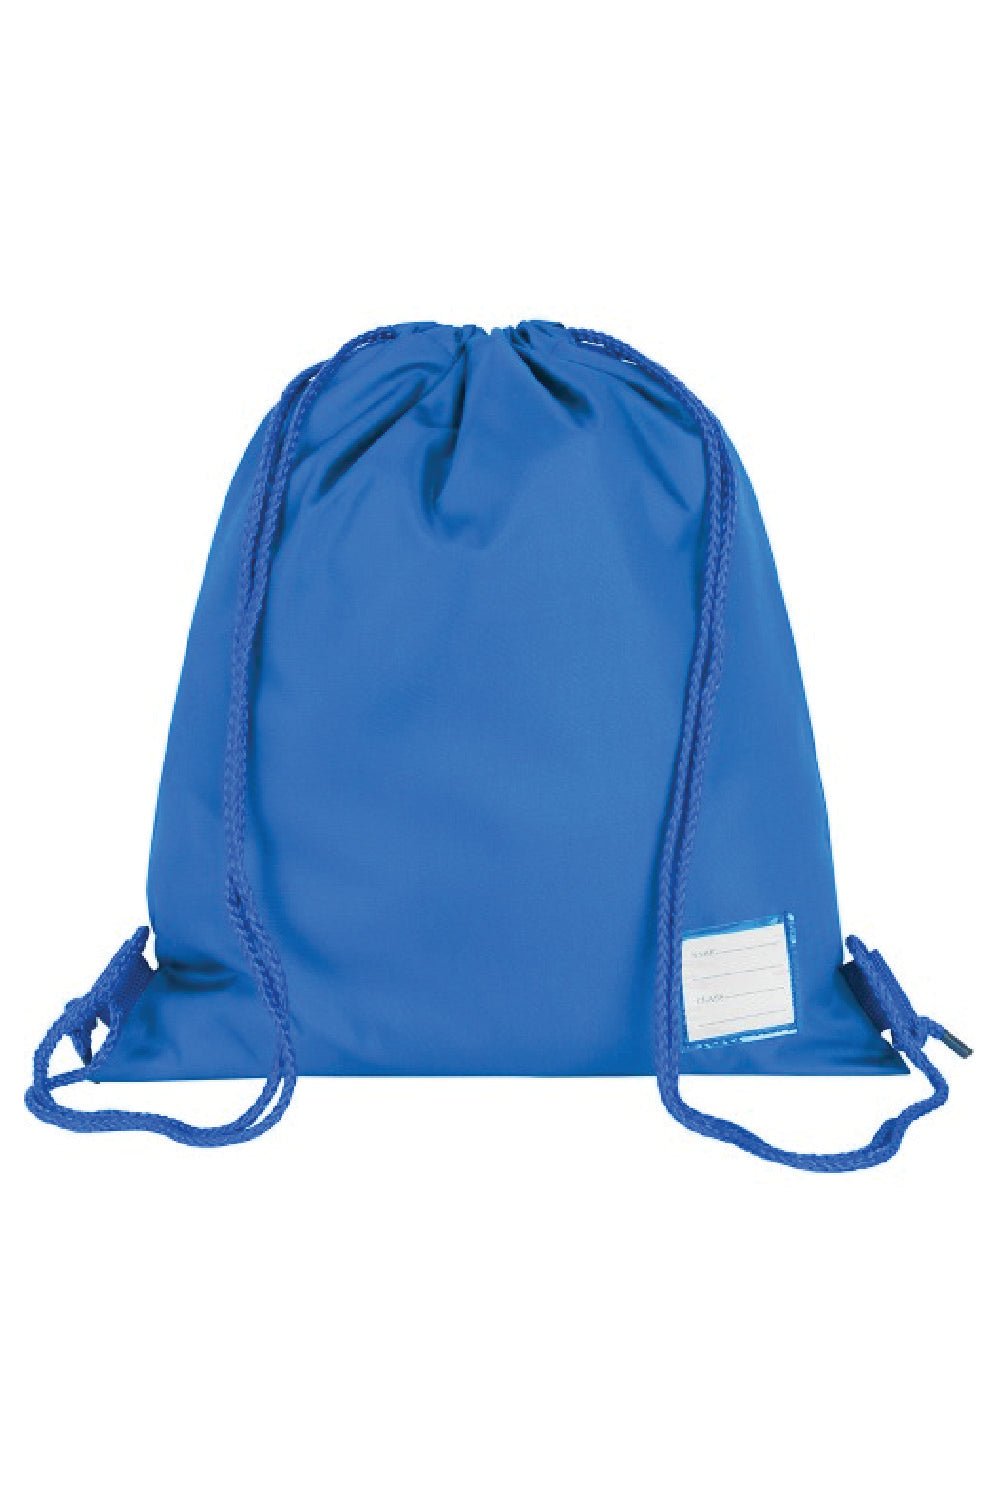 O.P PE Bag with personalisation - Uniformwise Schoolwear